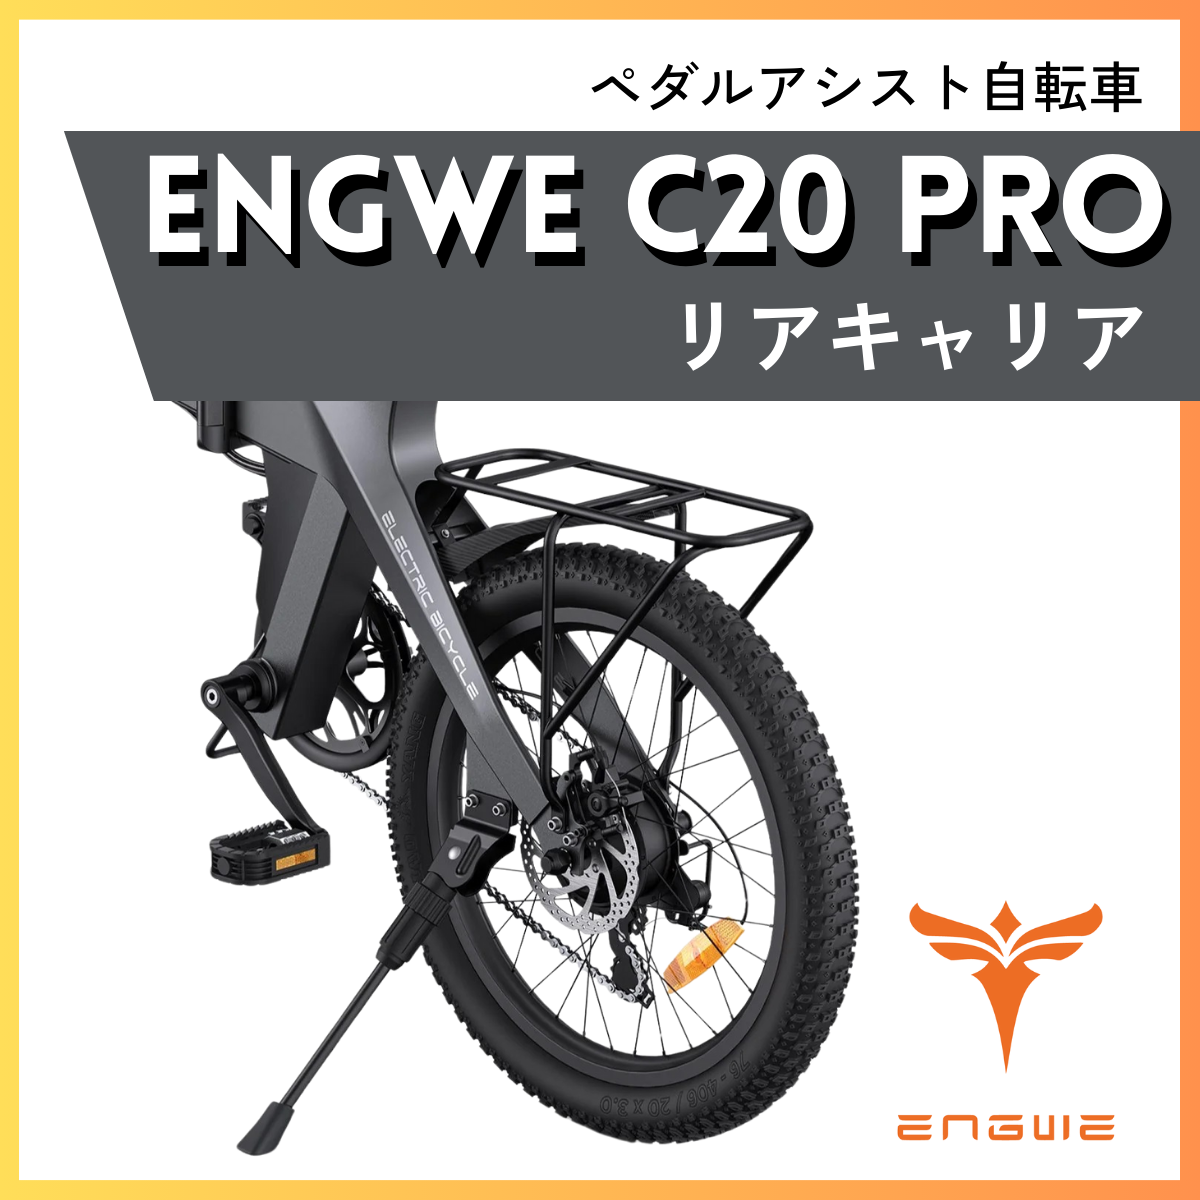 ENGWE C20 PRO専用 リアキャリア